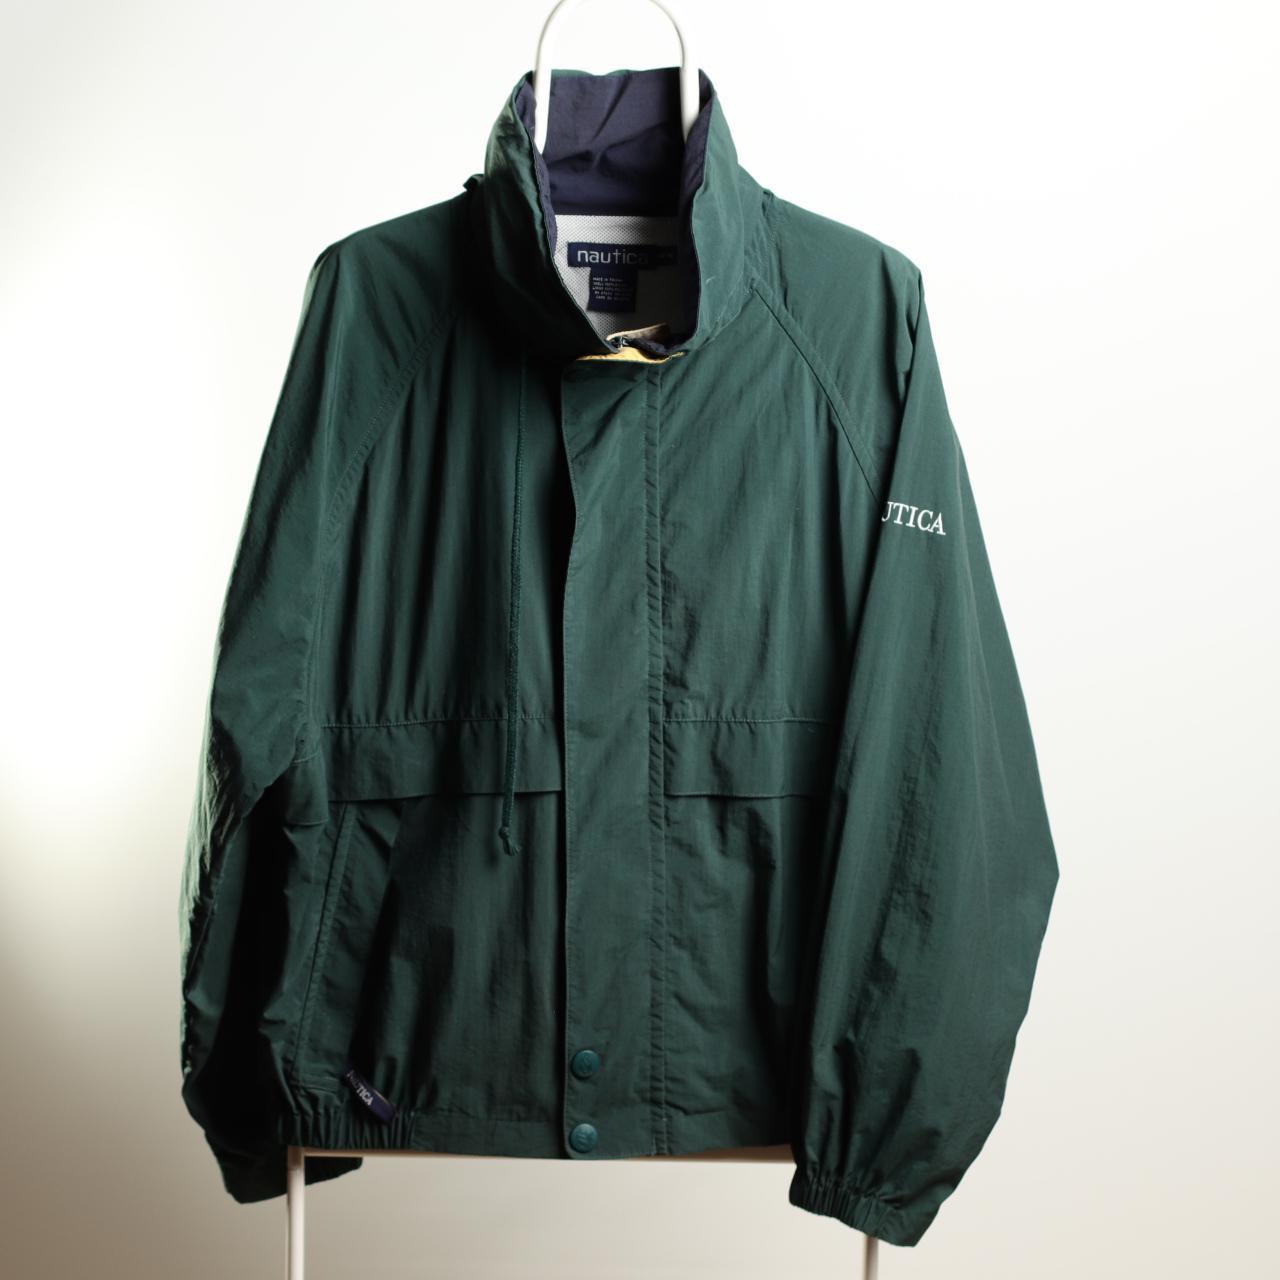 Nautica vintage windbreaker jacket in green. Two... - Depop